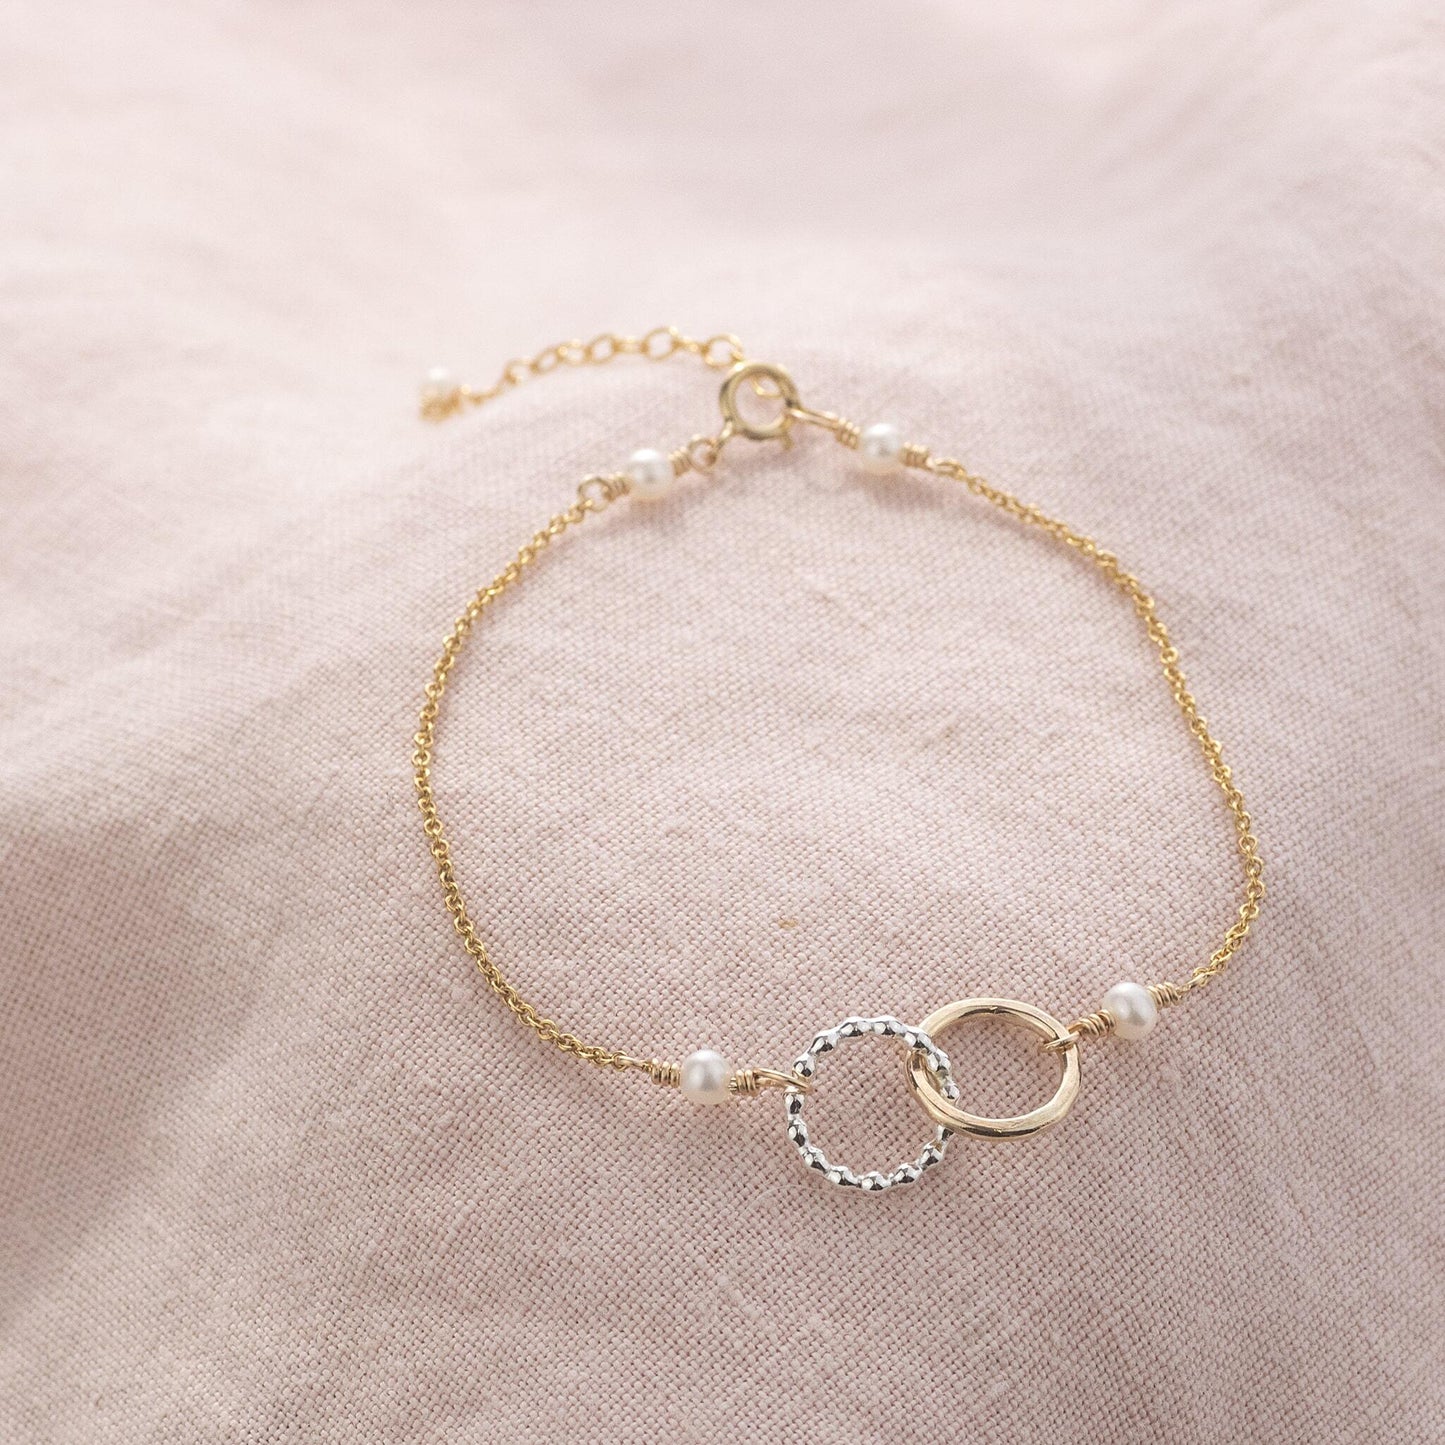 Gift for Sister & Bridesmaid - Love Link Bracelet - Silver & Gold